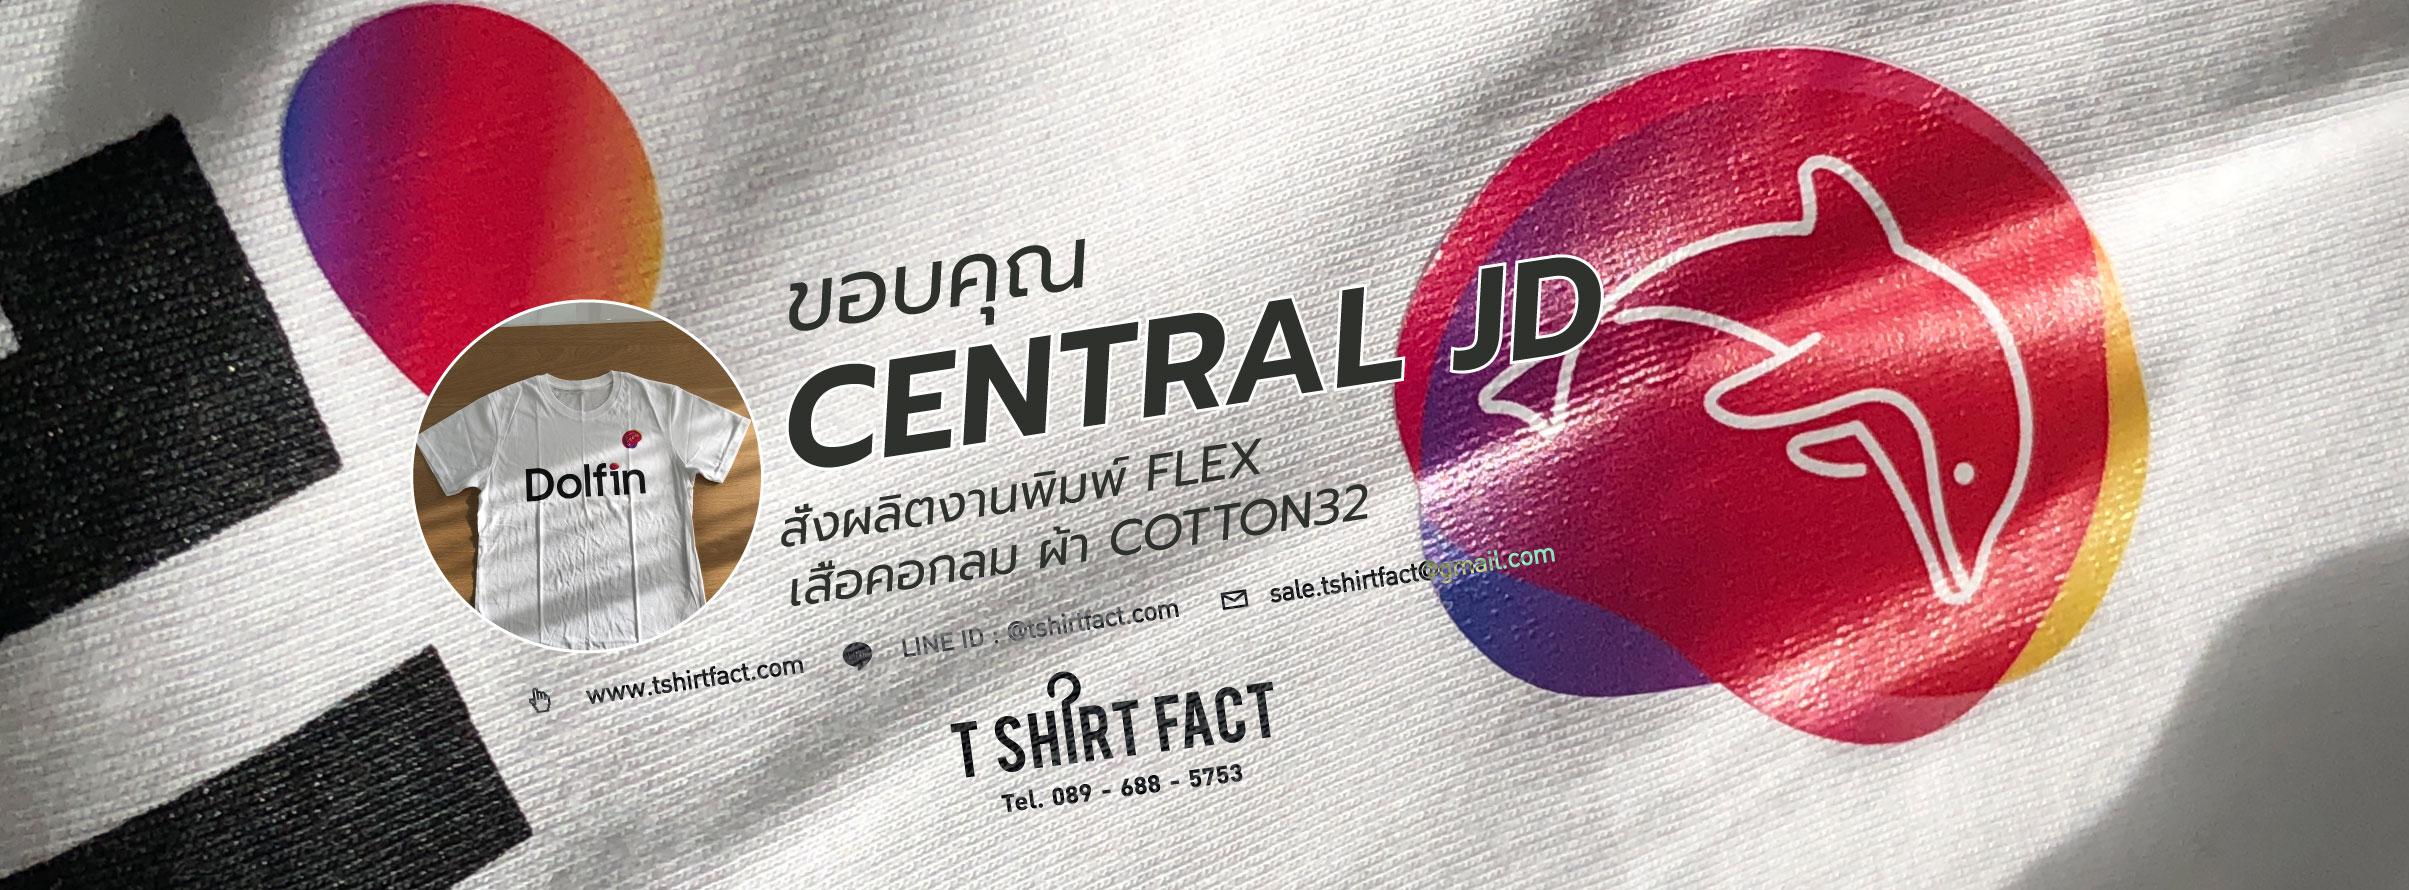 TSF-edm-2019_central-jd